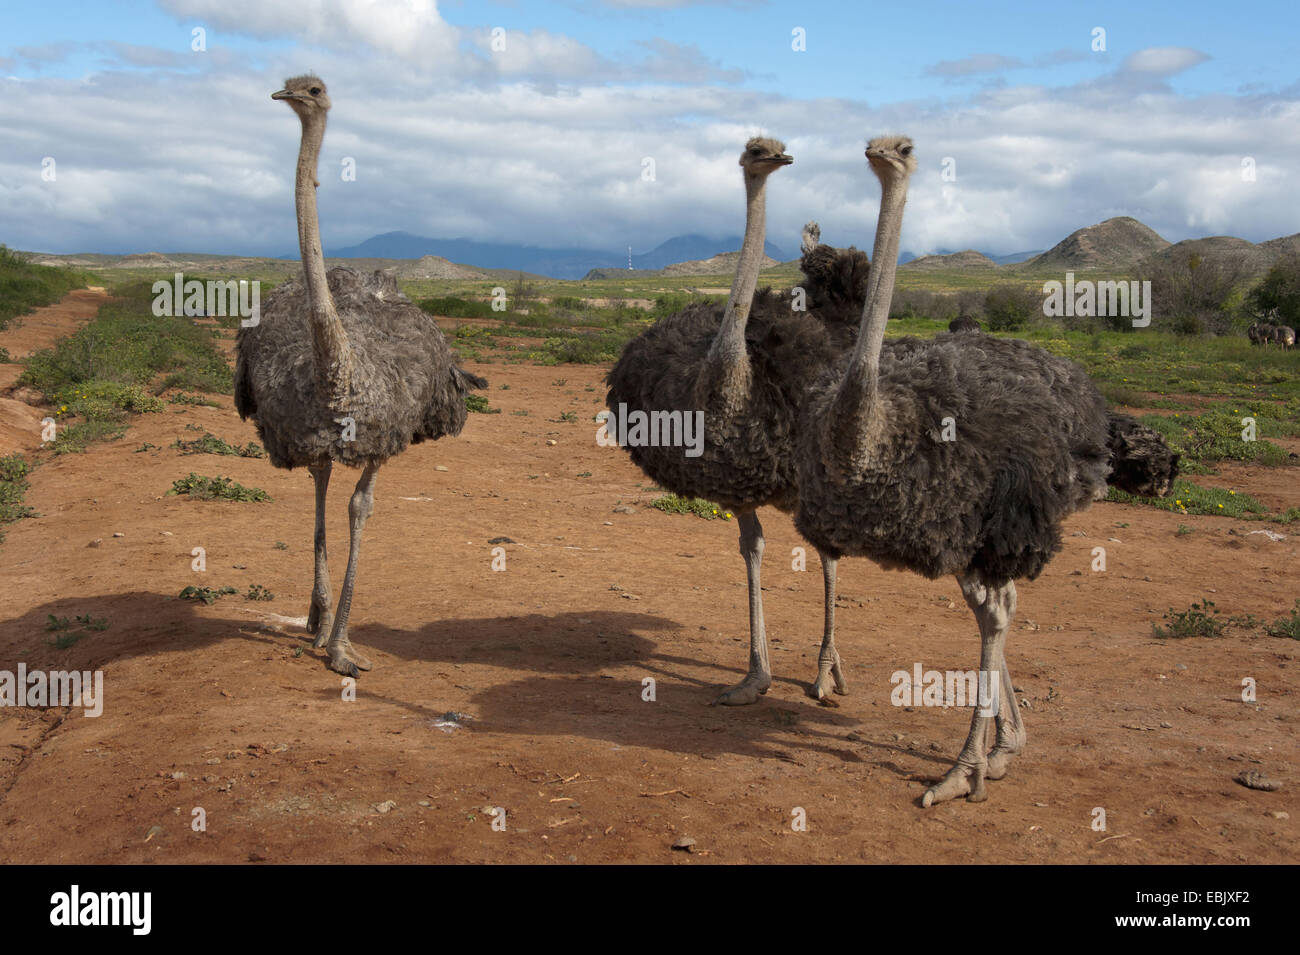 ostrich (Struthio camelus), three ostriches standing in savanna, South Africa, Western Cape Stock Photo